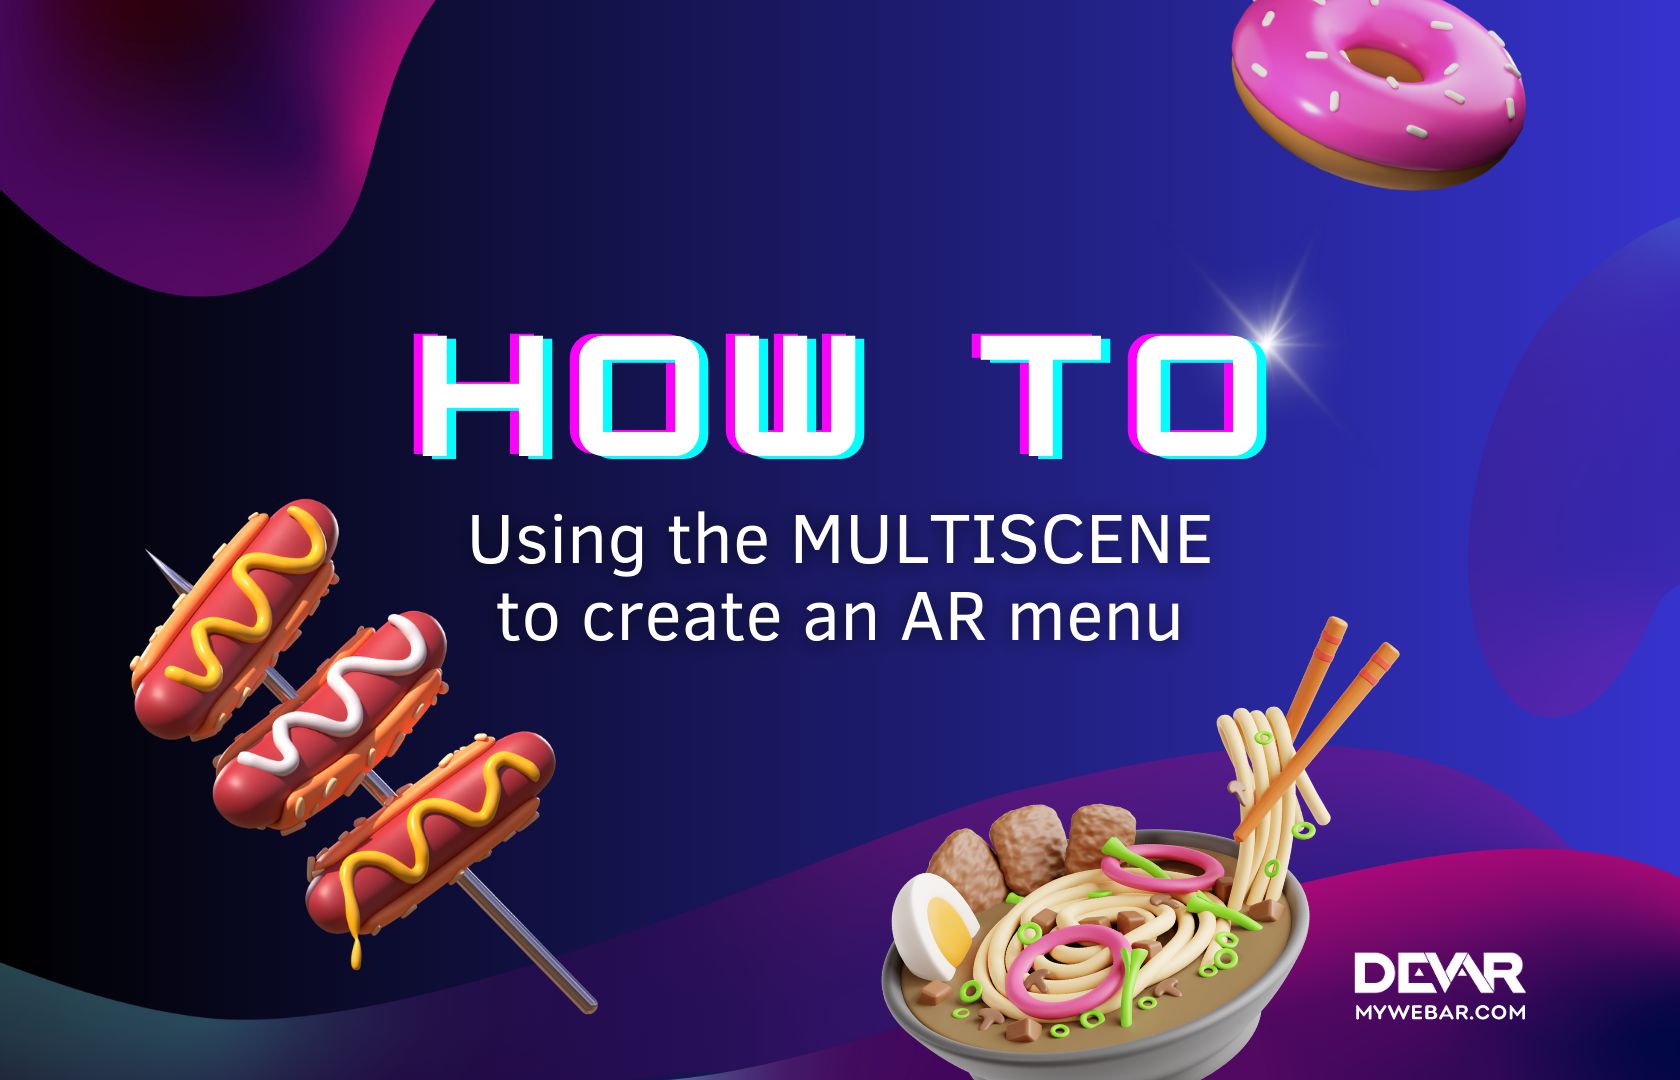 HOW TO: Using the Multiscene to create AR menu